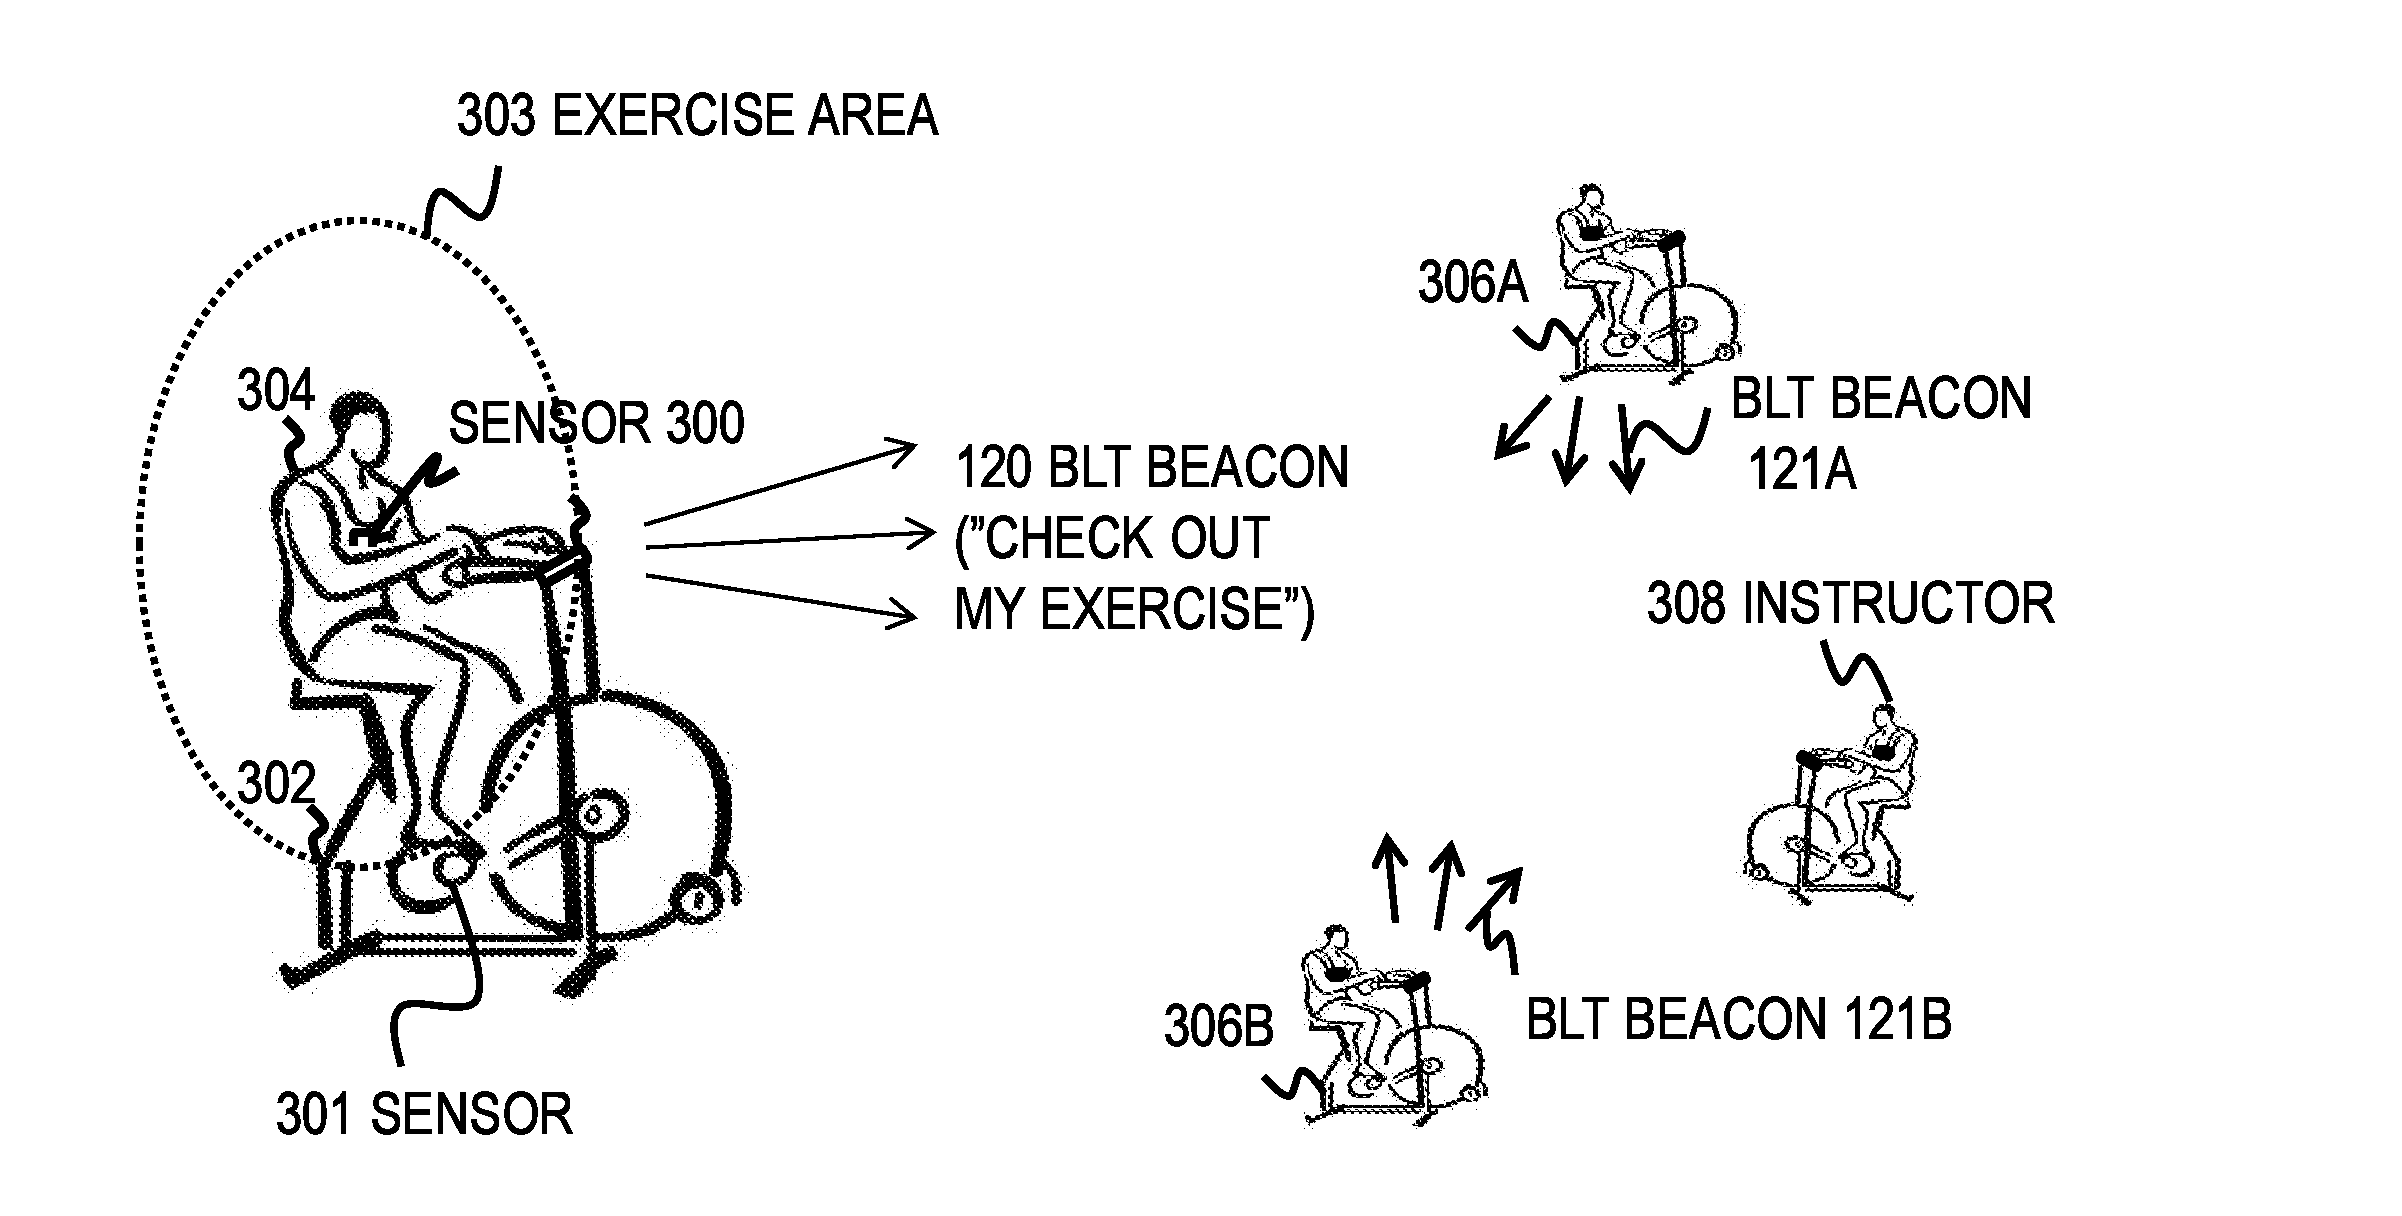 Bluetooth beacon transmission